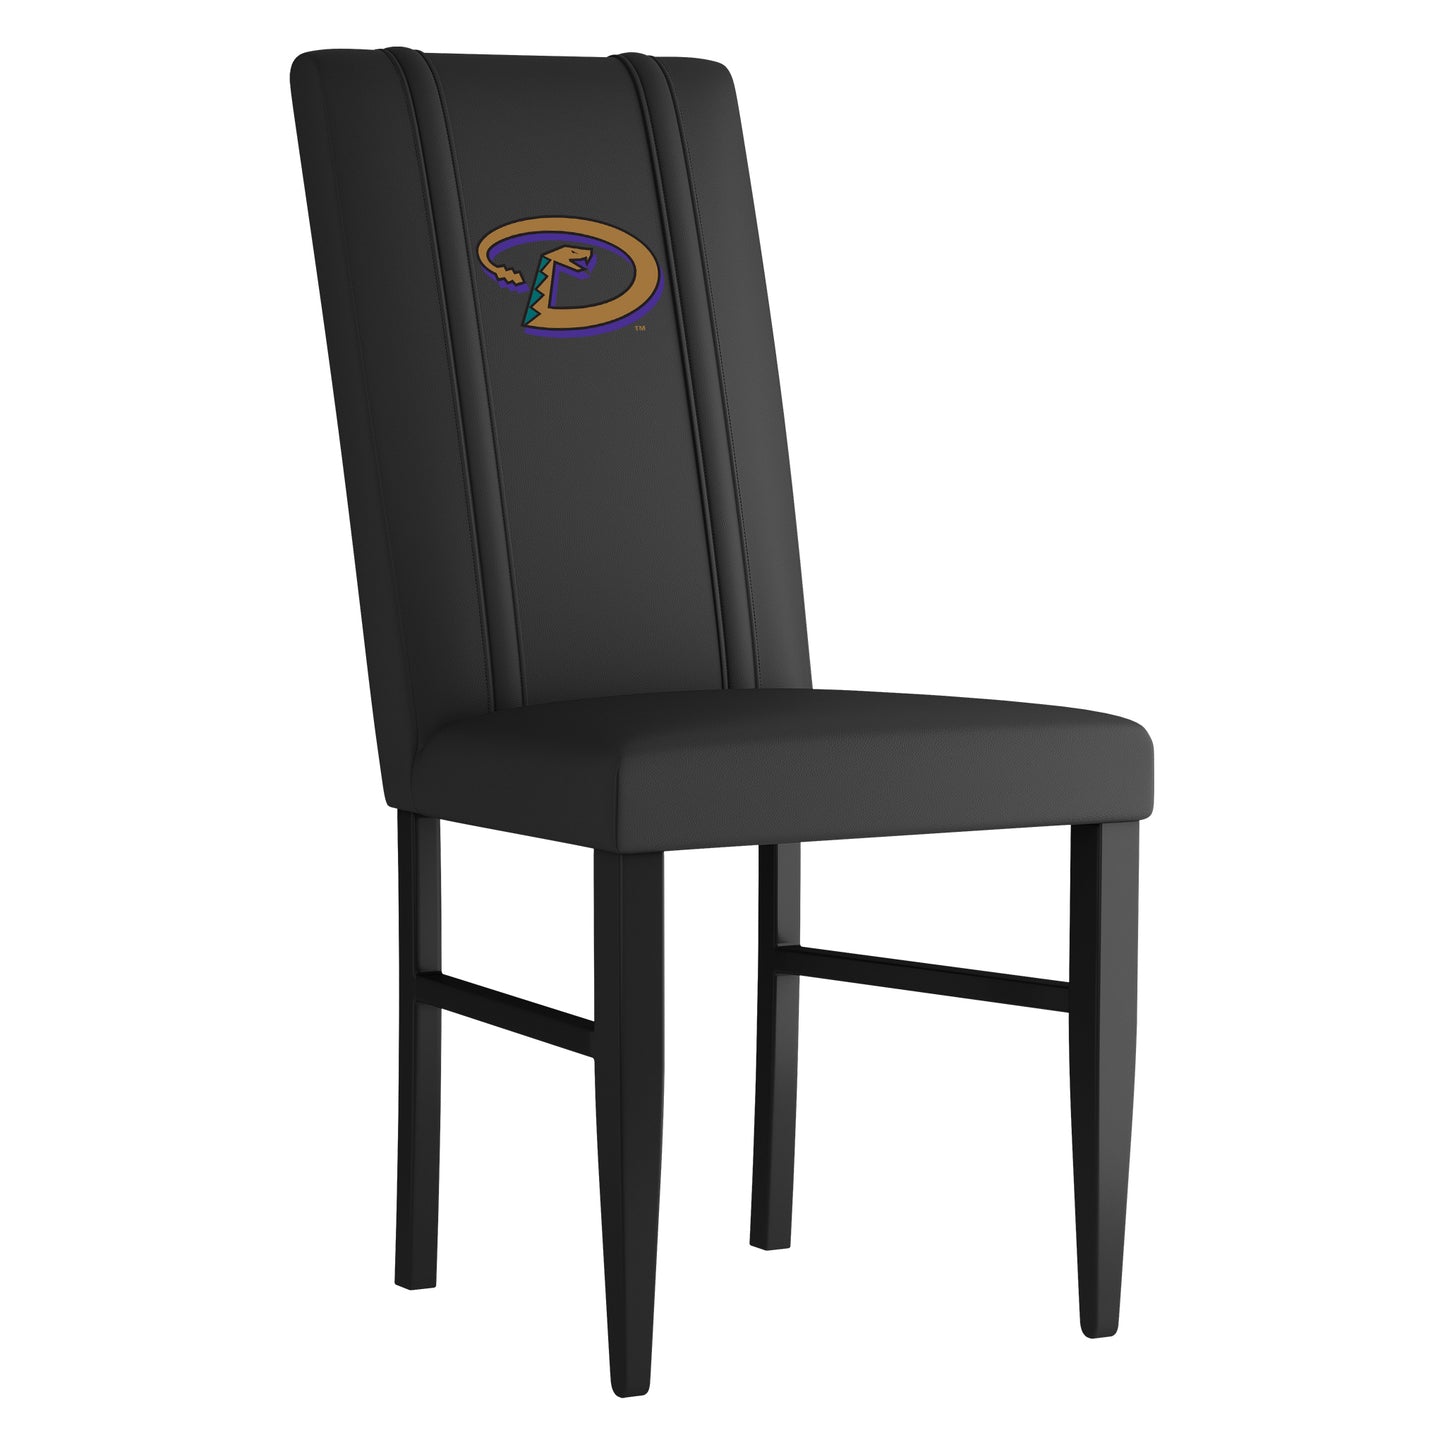 Side Chair 2000 with Arizona Diamondbacks Cooperstown Secondary Set of 2